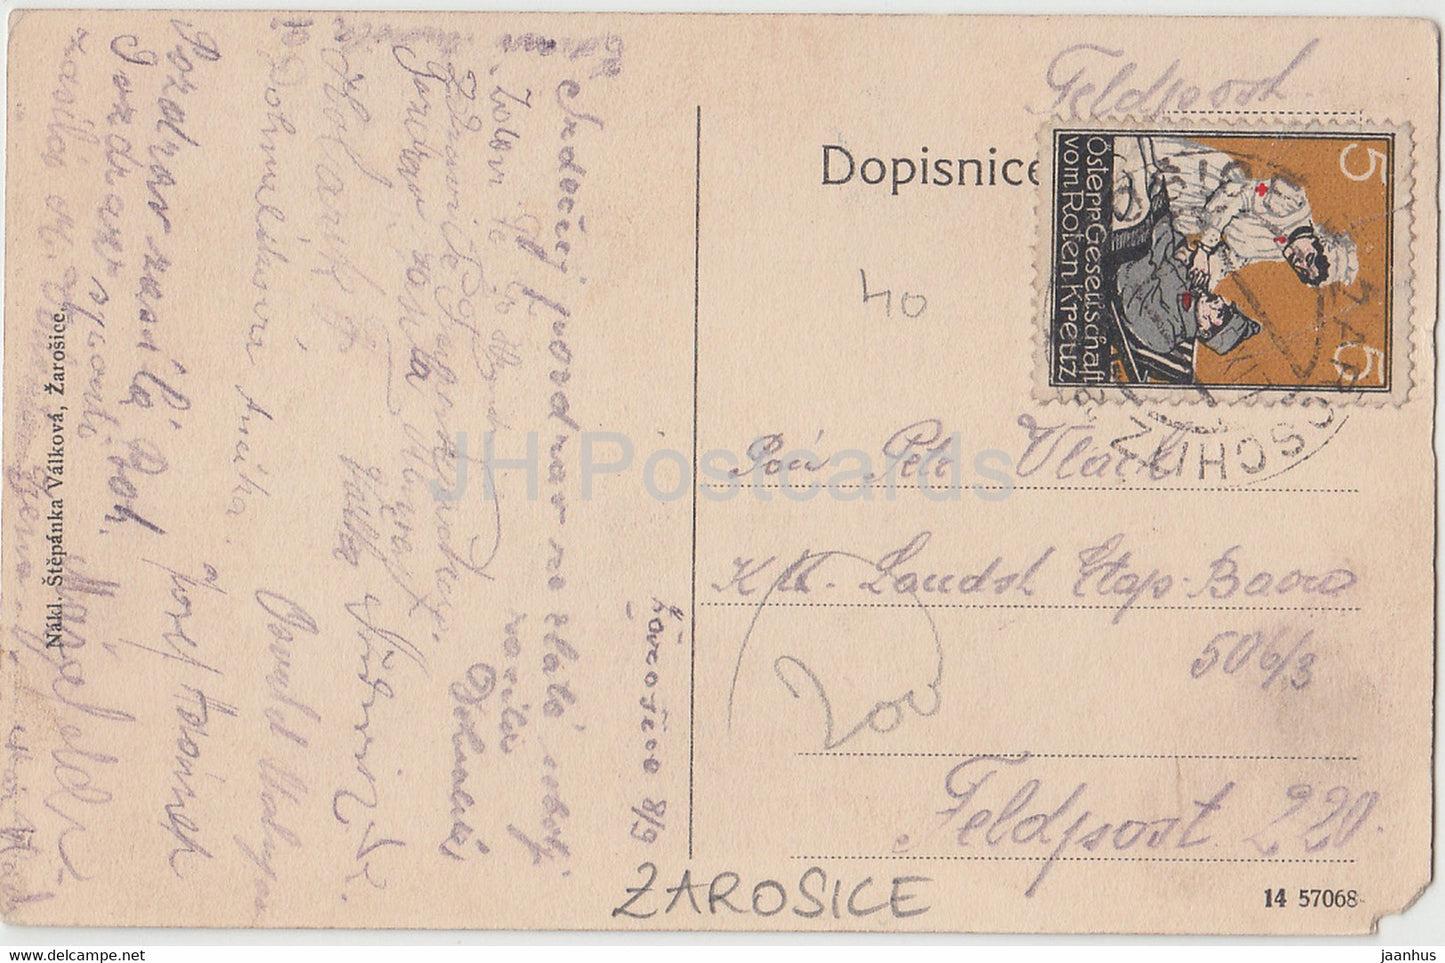 Pozdrav ze Zarosic - Zarosice - Feldpost - old postcard - Czech Republic - used